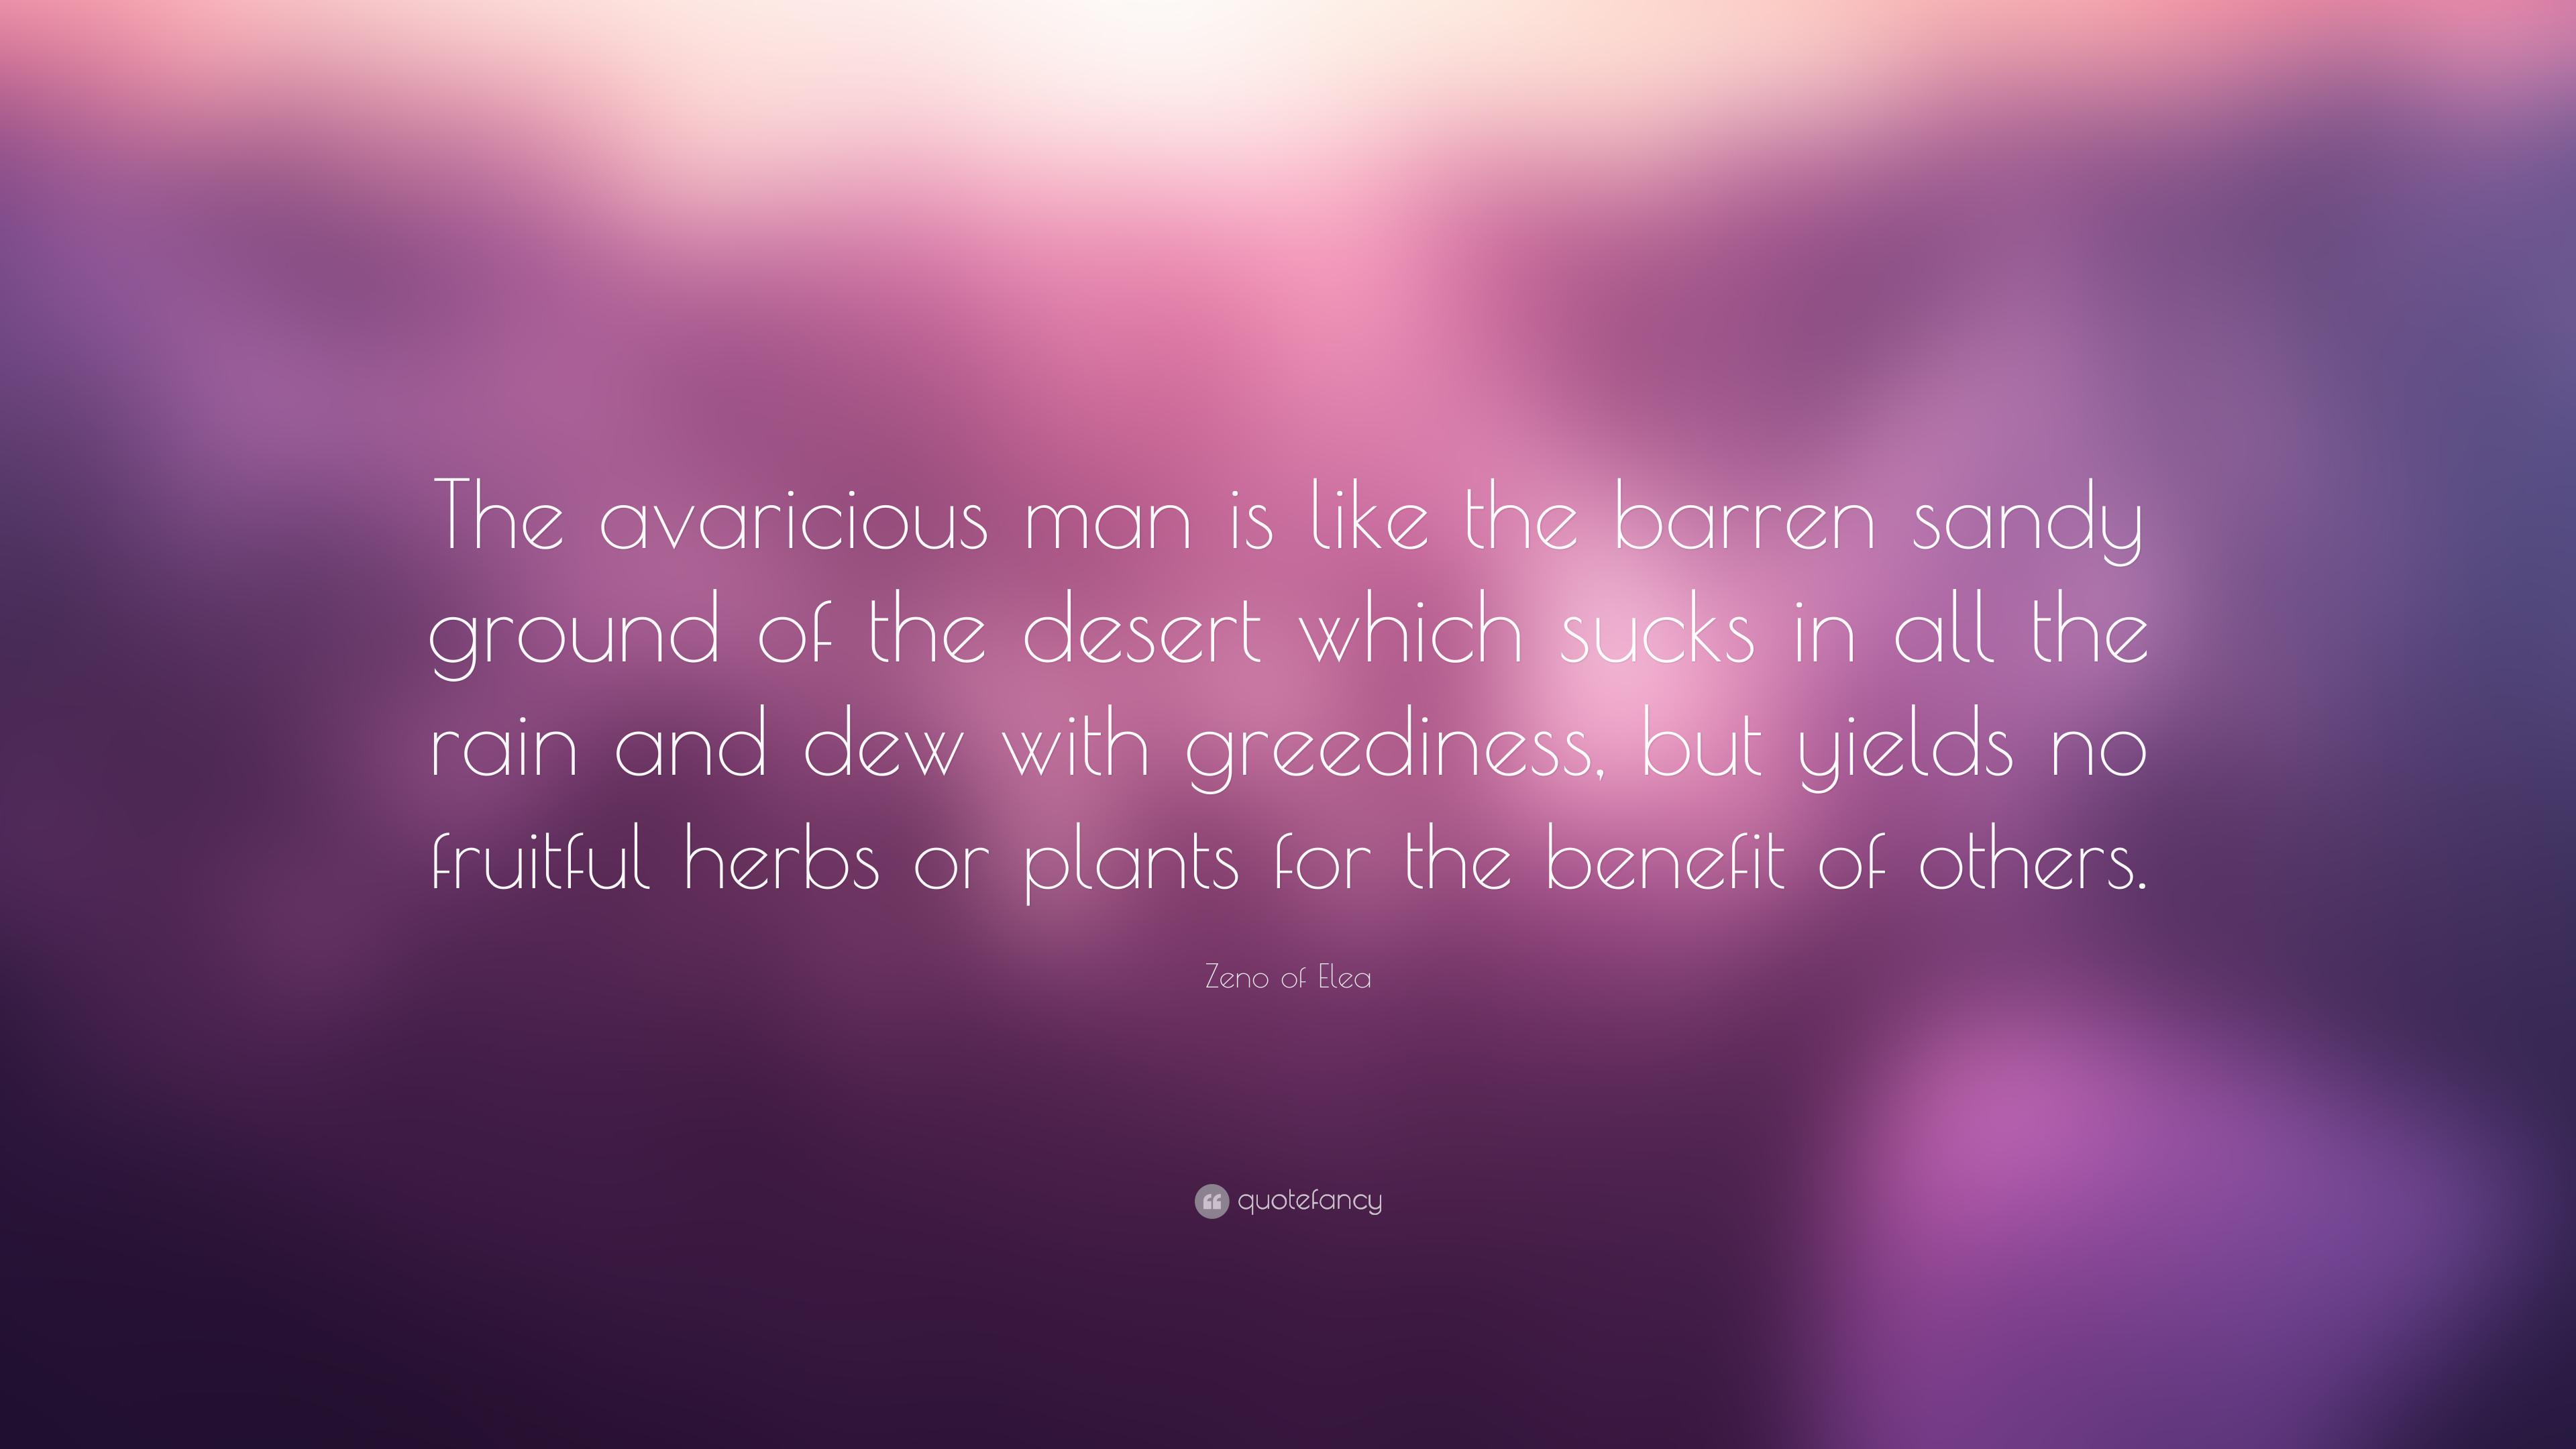 Zeno of Elea Quote: “The avaricious man is like the barren sandy